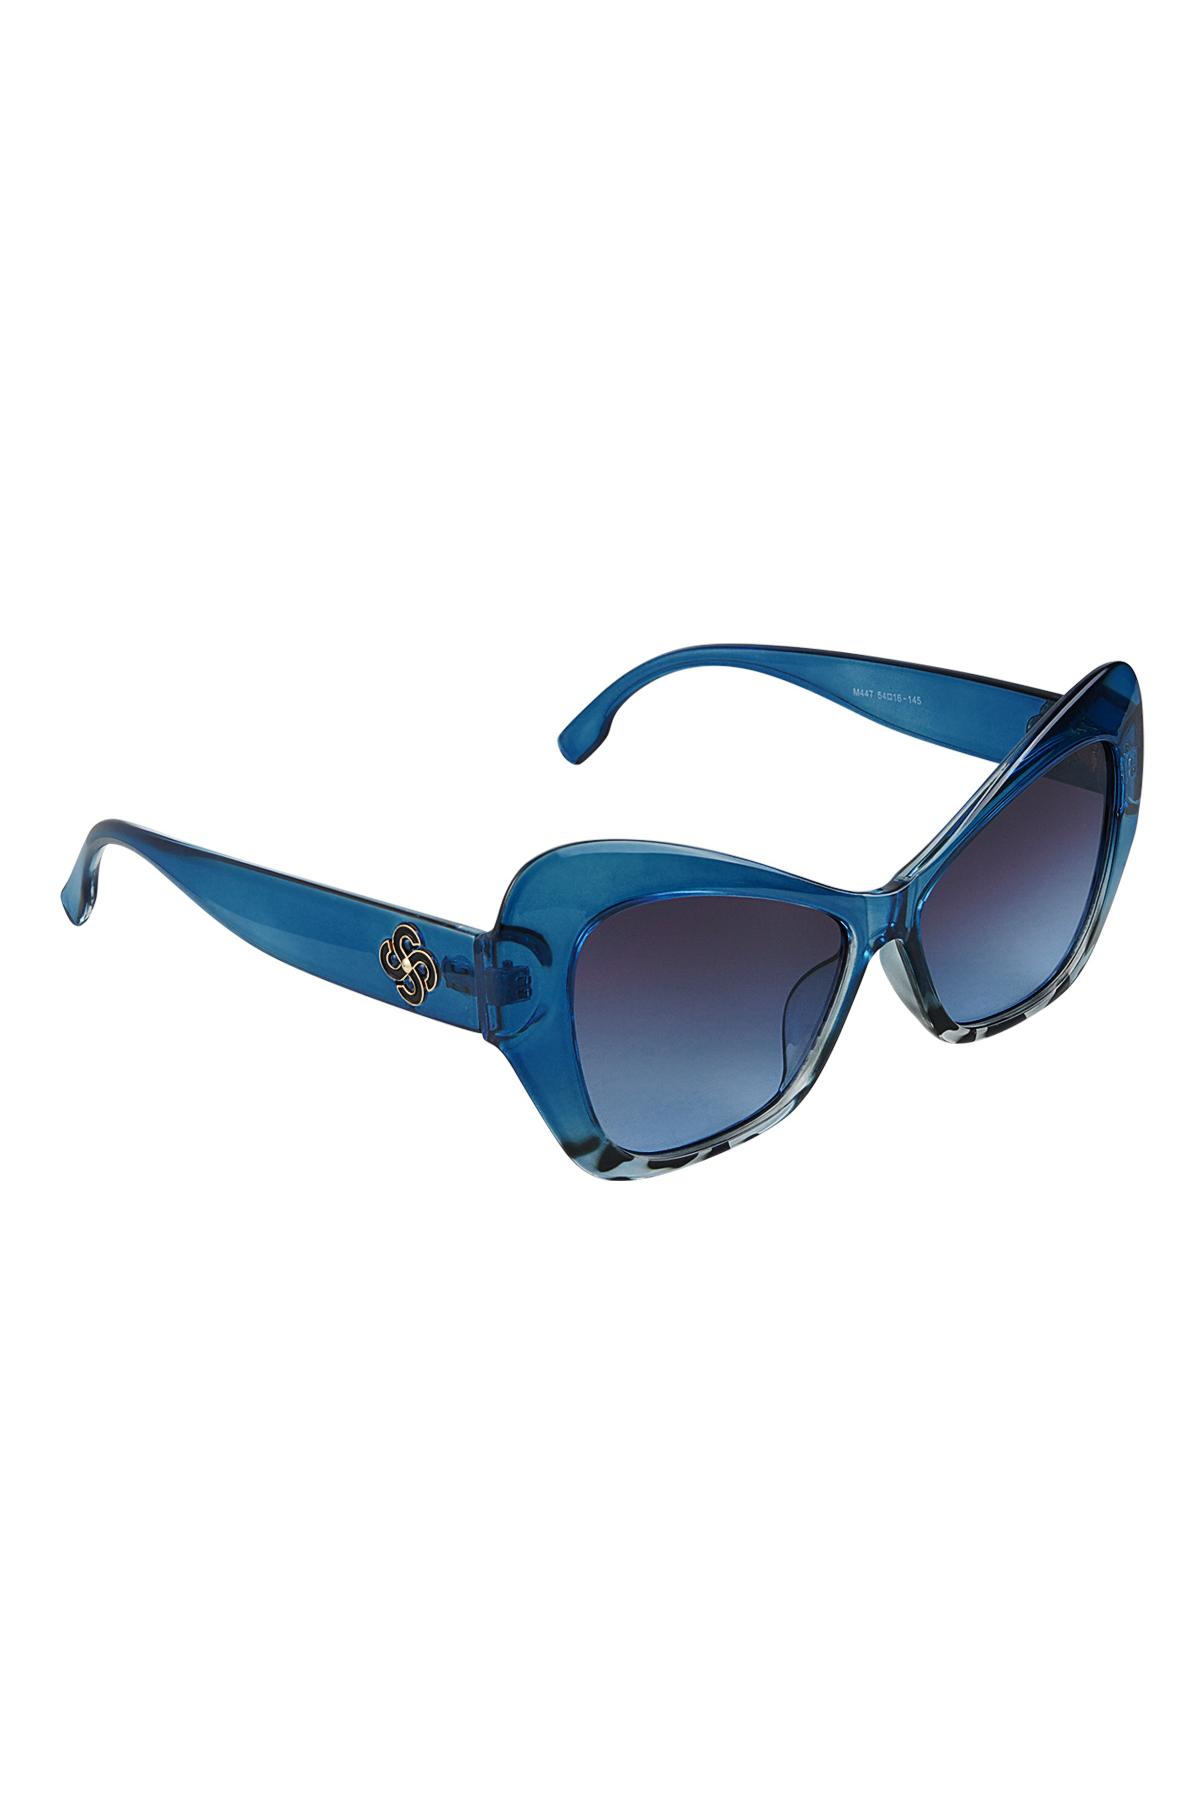 Sunglasses statement Blue PC One size h5 